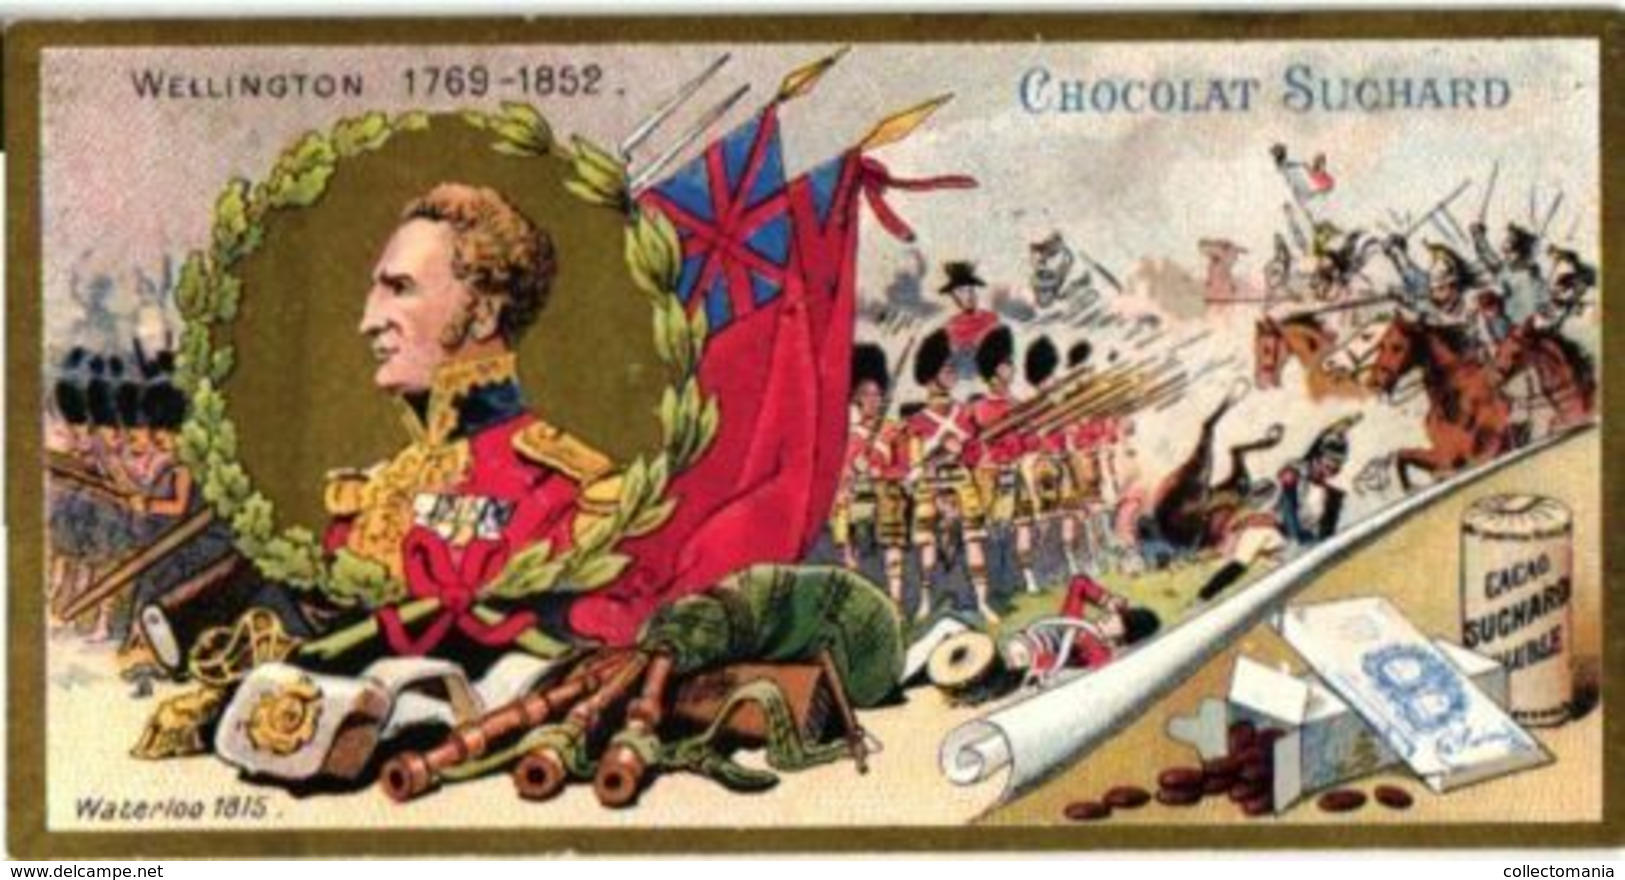 6 chromo litho cards chocolate SUCHARD set59A c1899 Famous Comanders Litho Napoleon skobeleff  Wellington